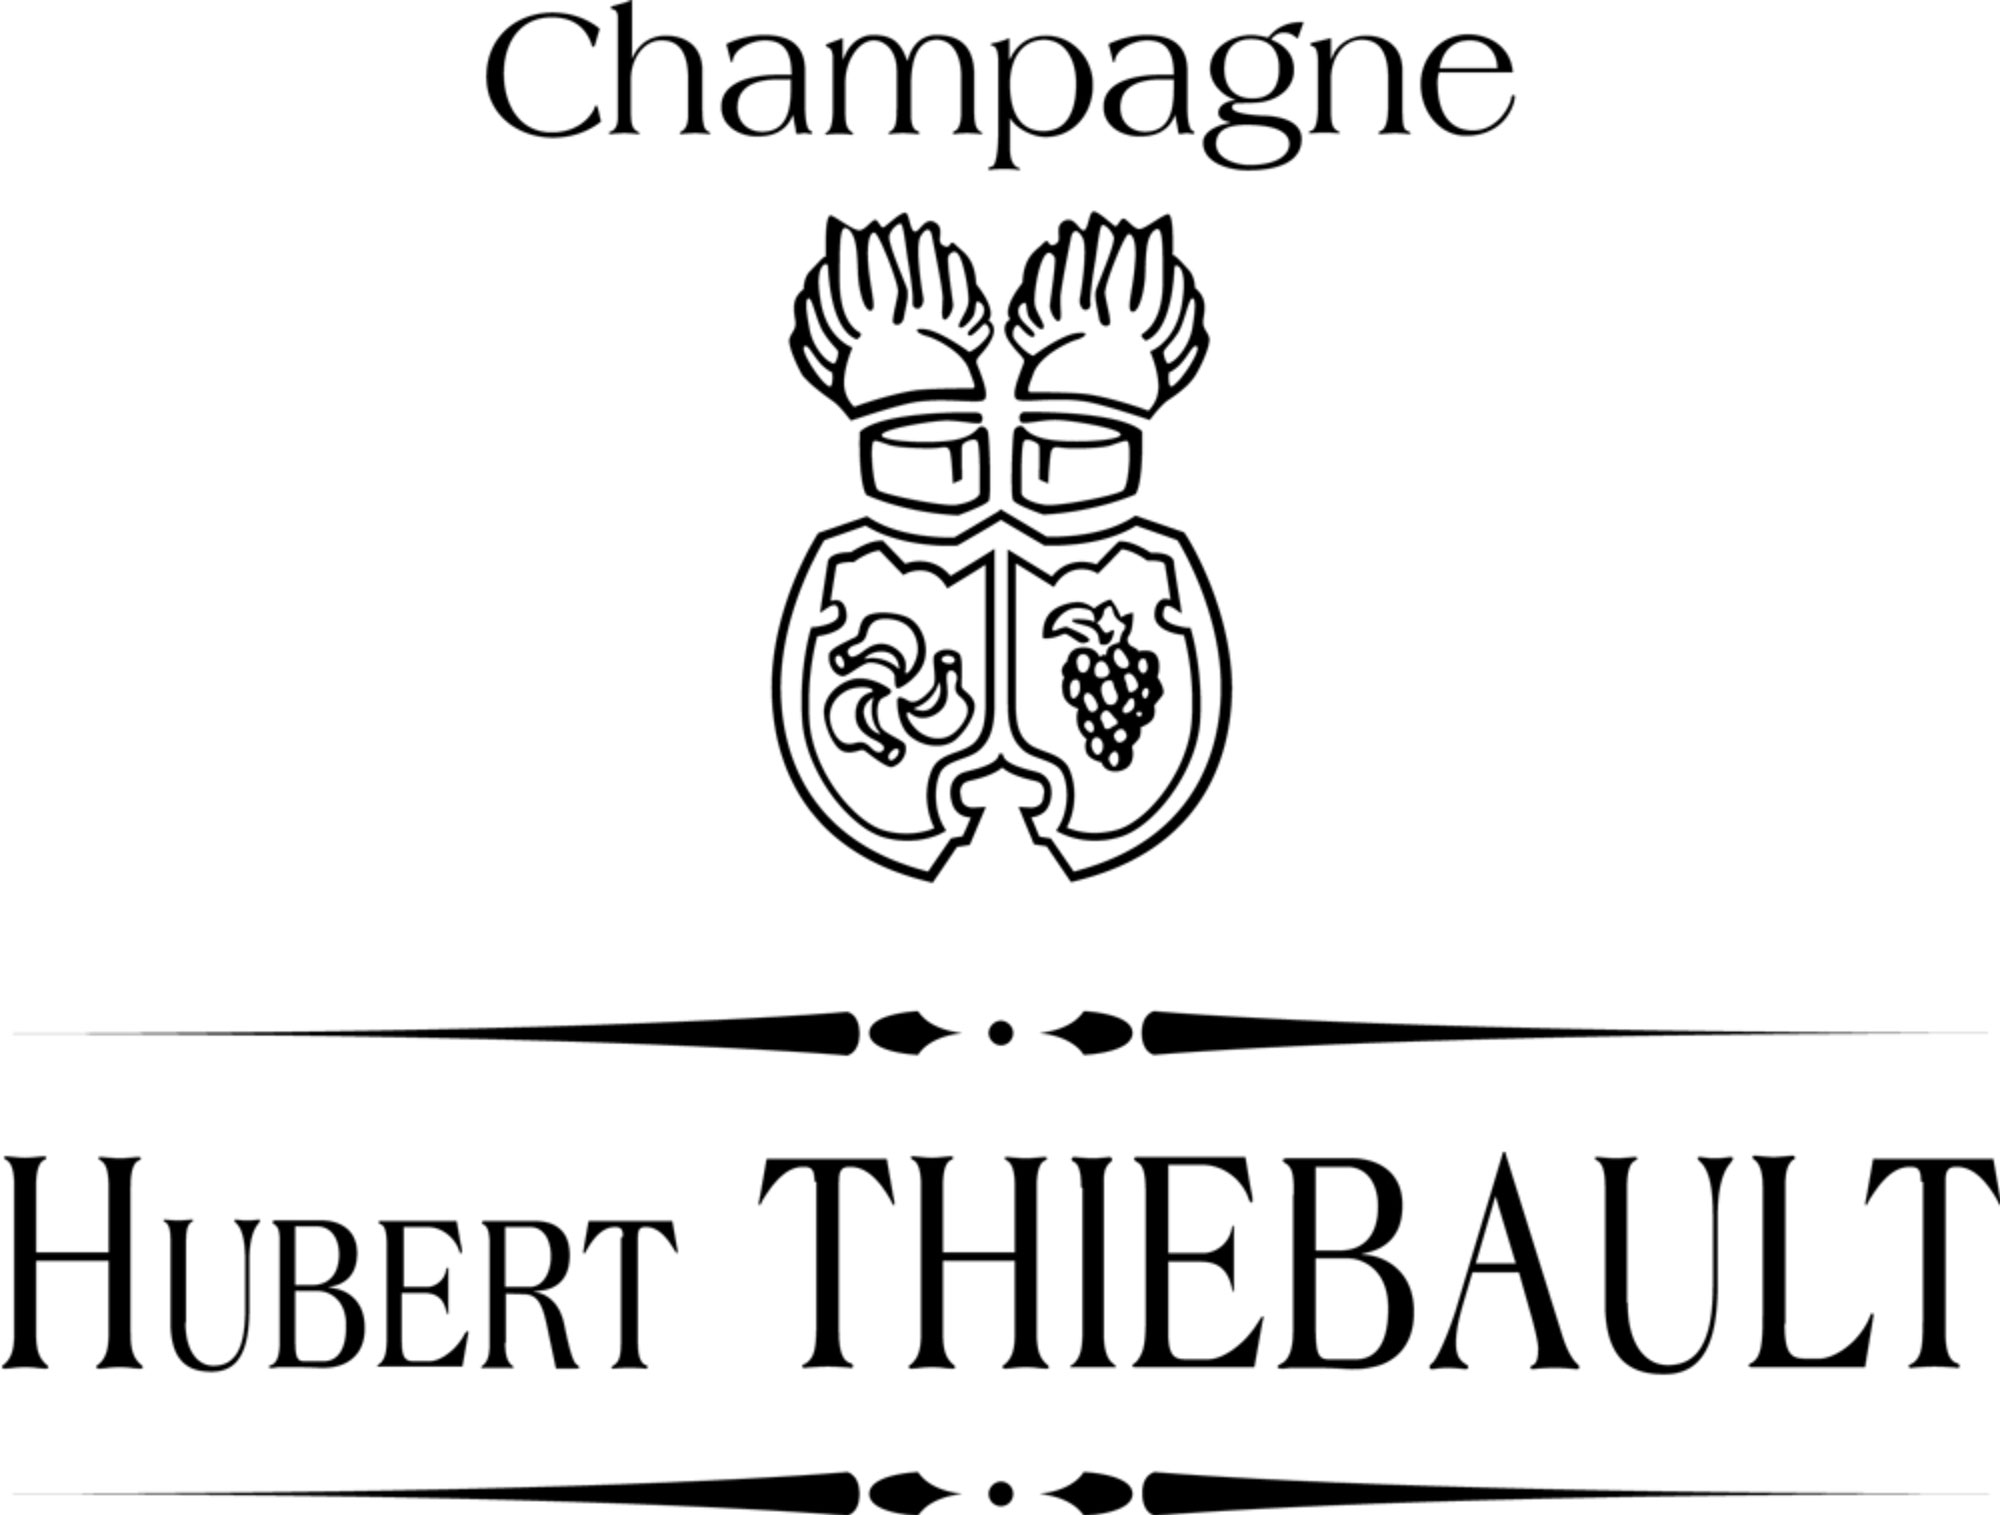 Champagne Hubert Thiébault